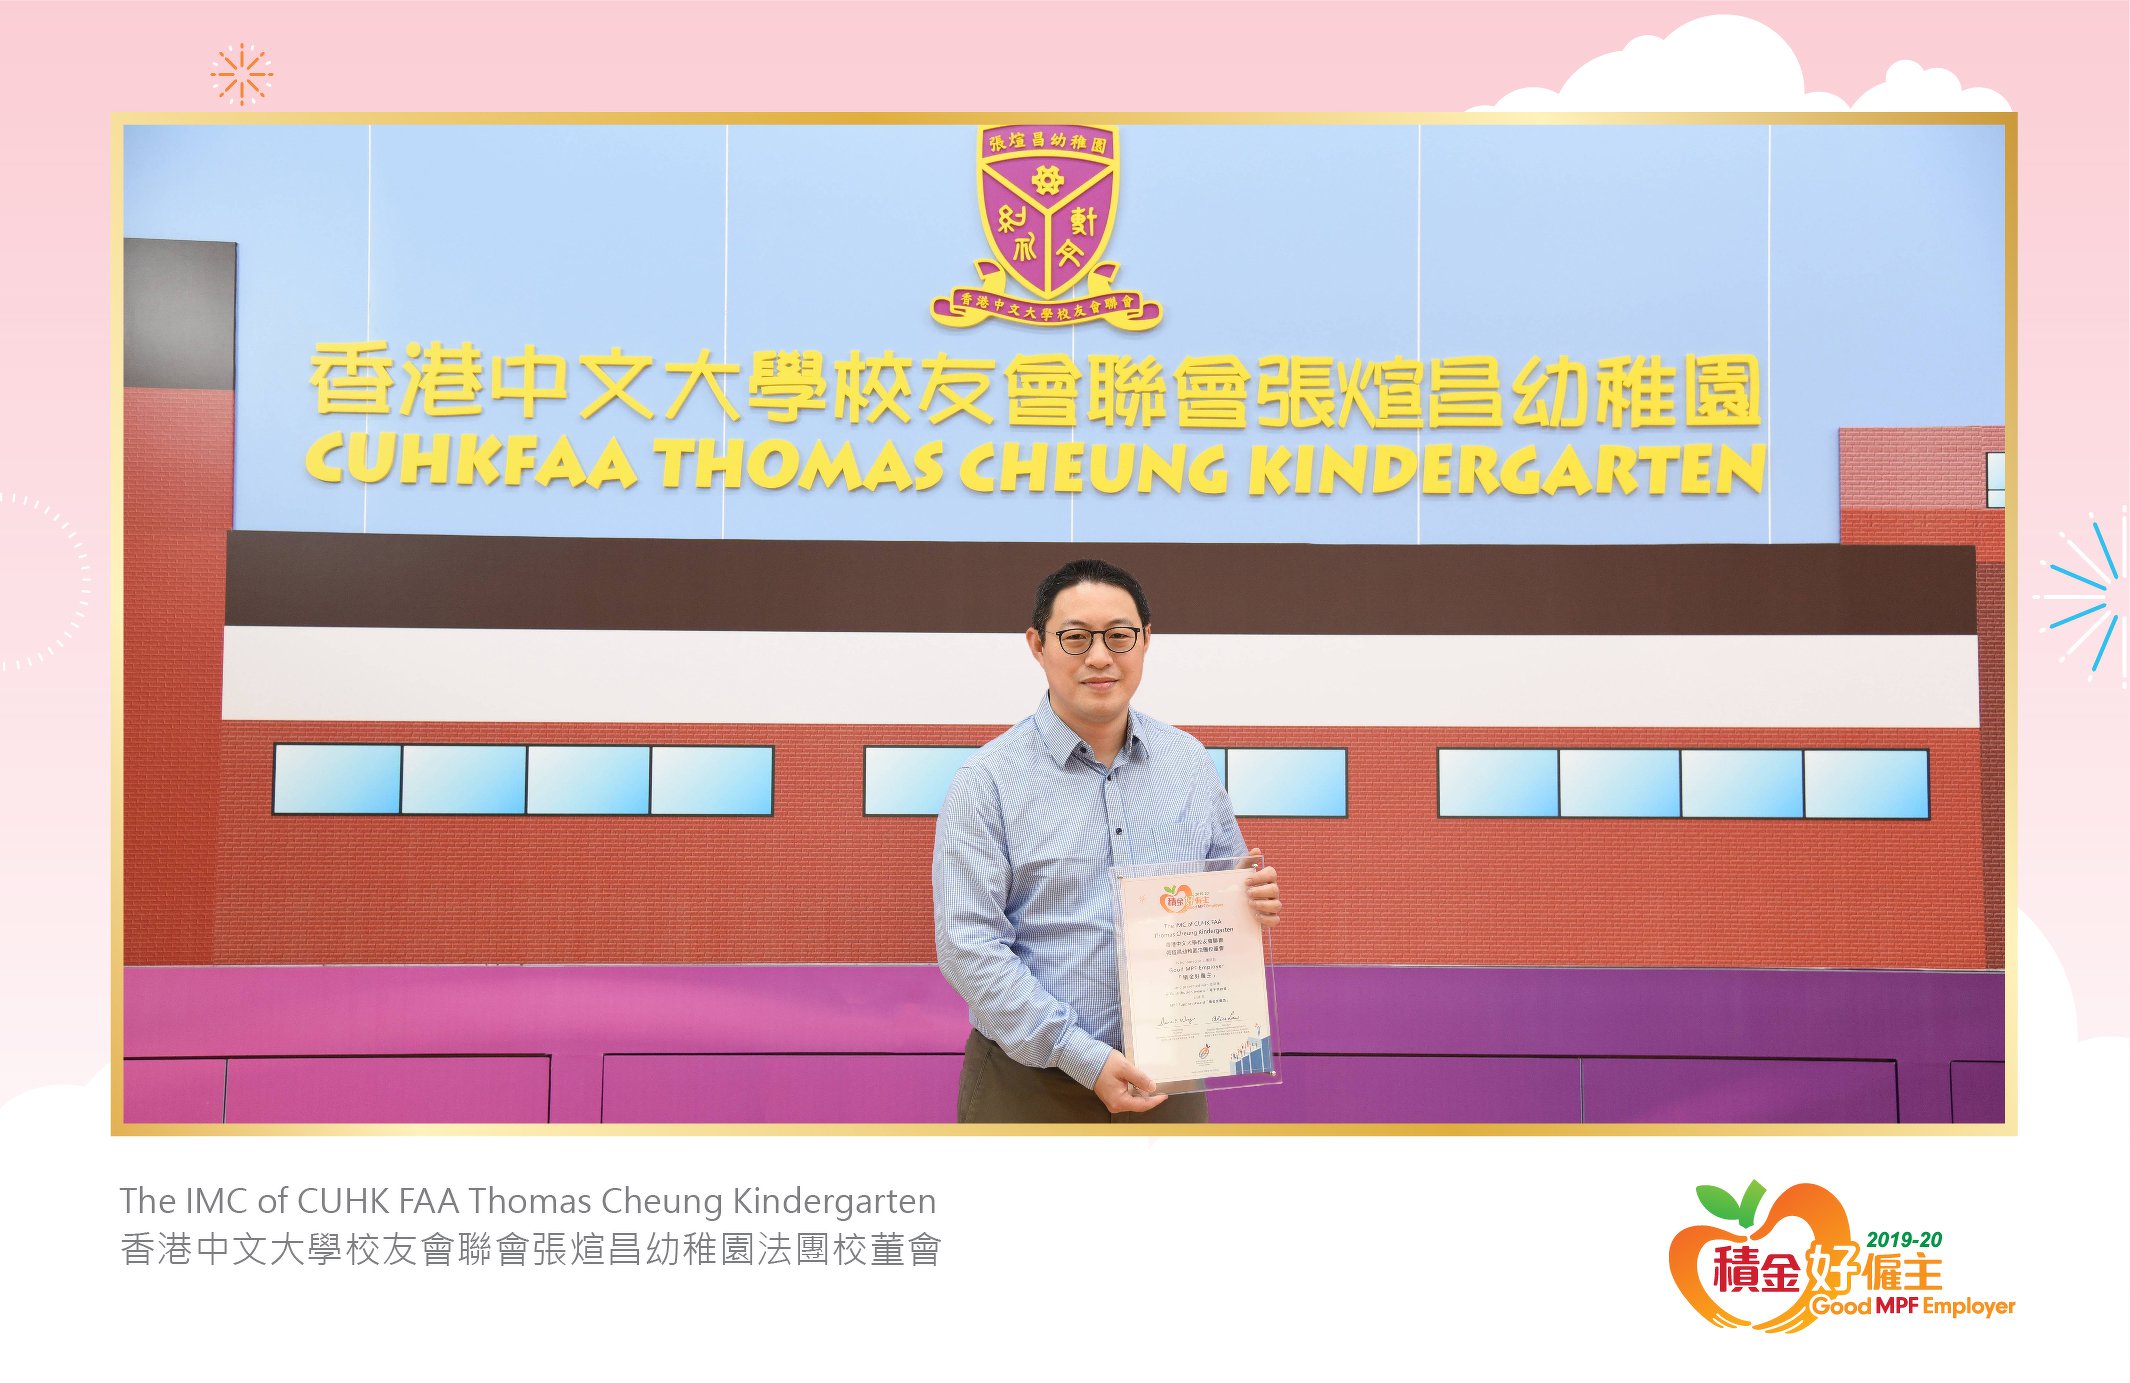 The IMC of CUHK FAA Thomas Cheung Kindergarten 香港中文大學校友會聯會張煊昌幼稚園法團校董會